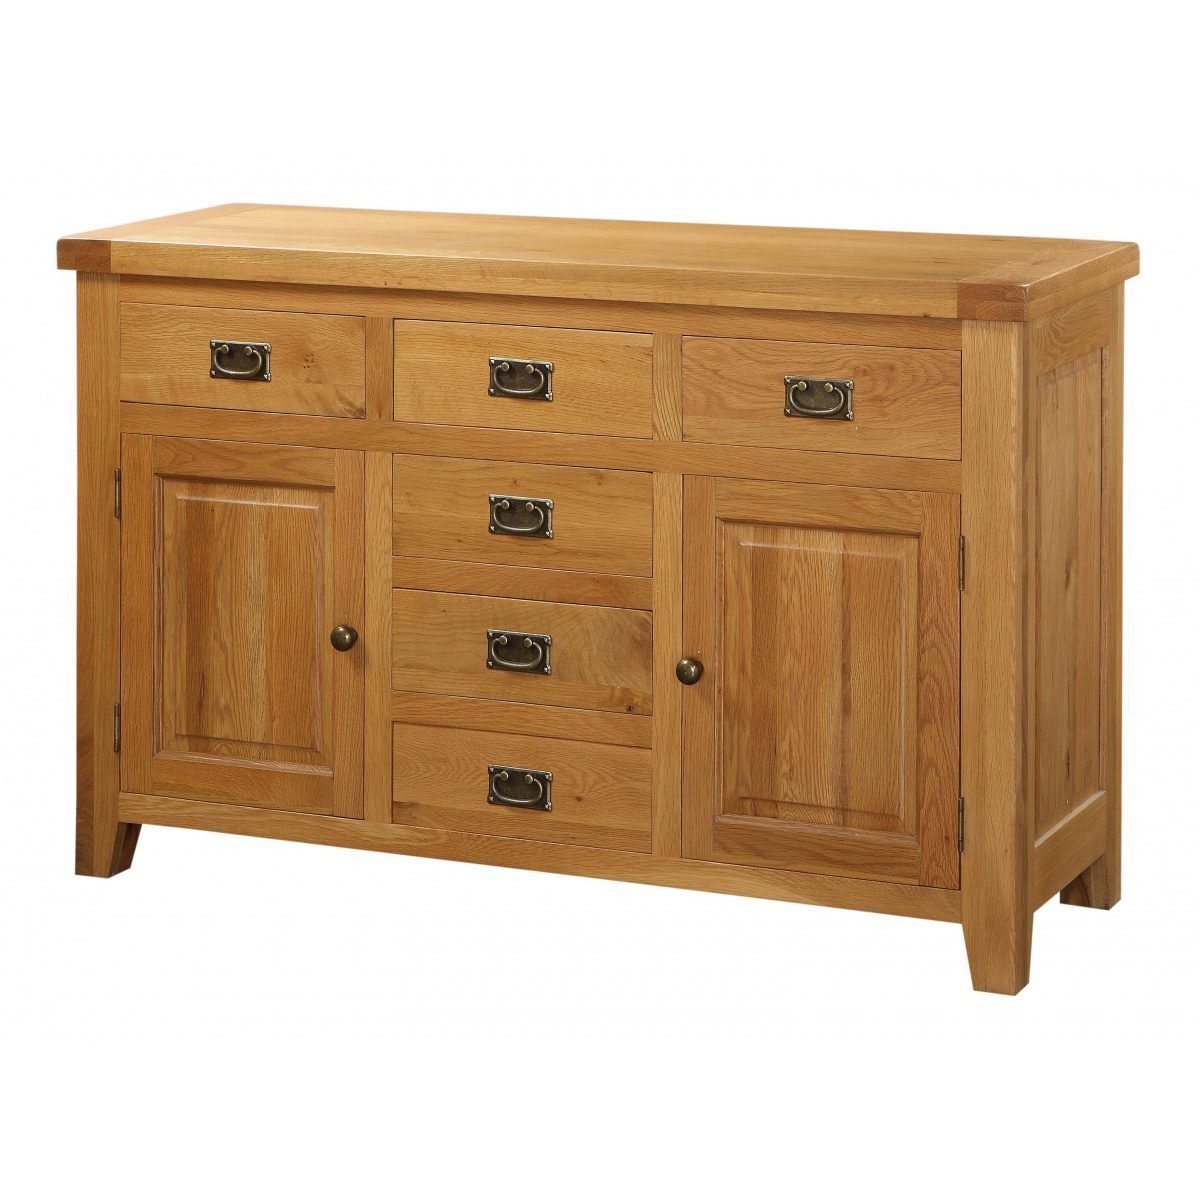 Acorn Solid Oak Sideboard Large 2 Doors & 6 Drawers - Grab Some Furniture